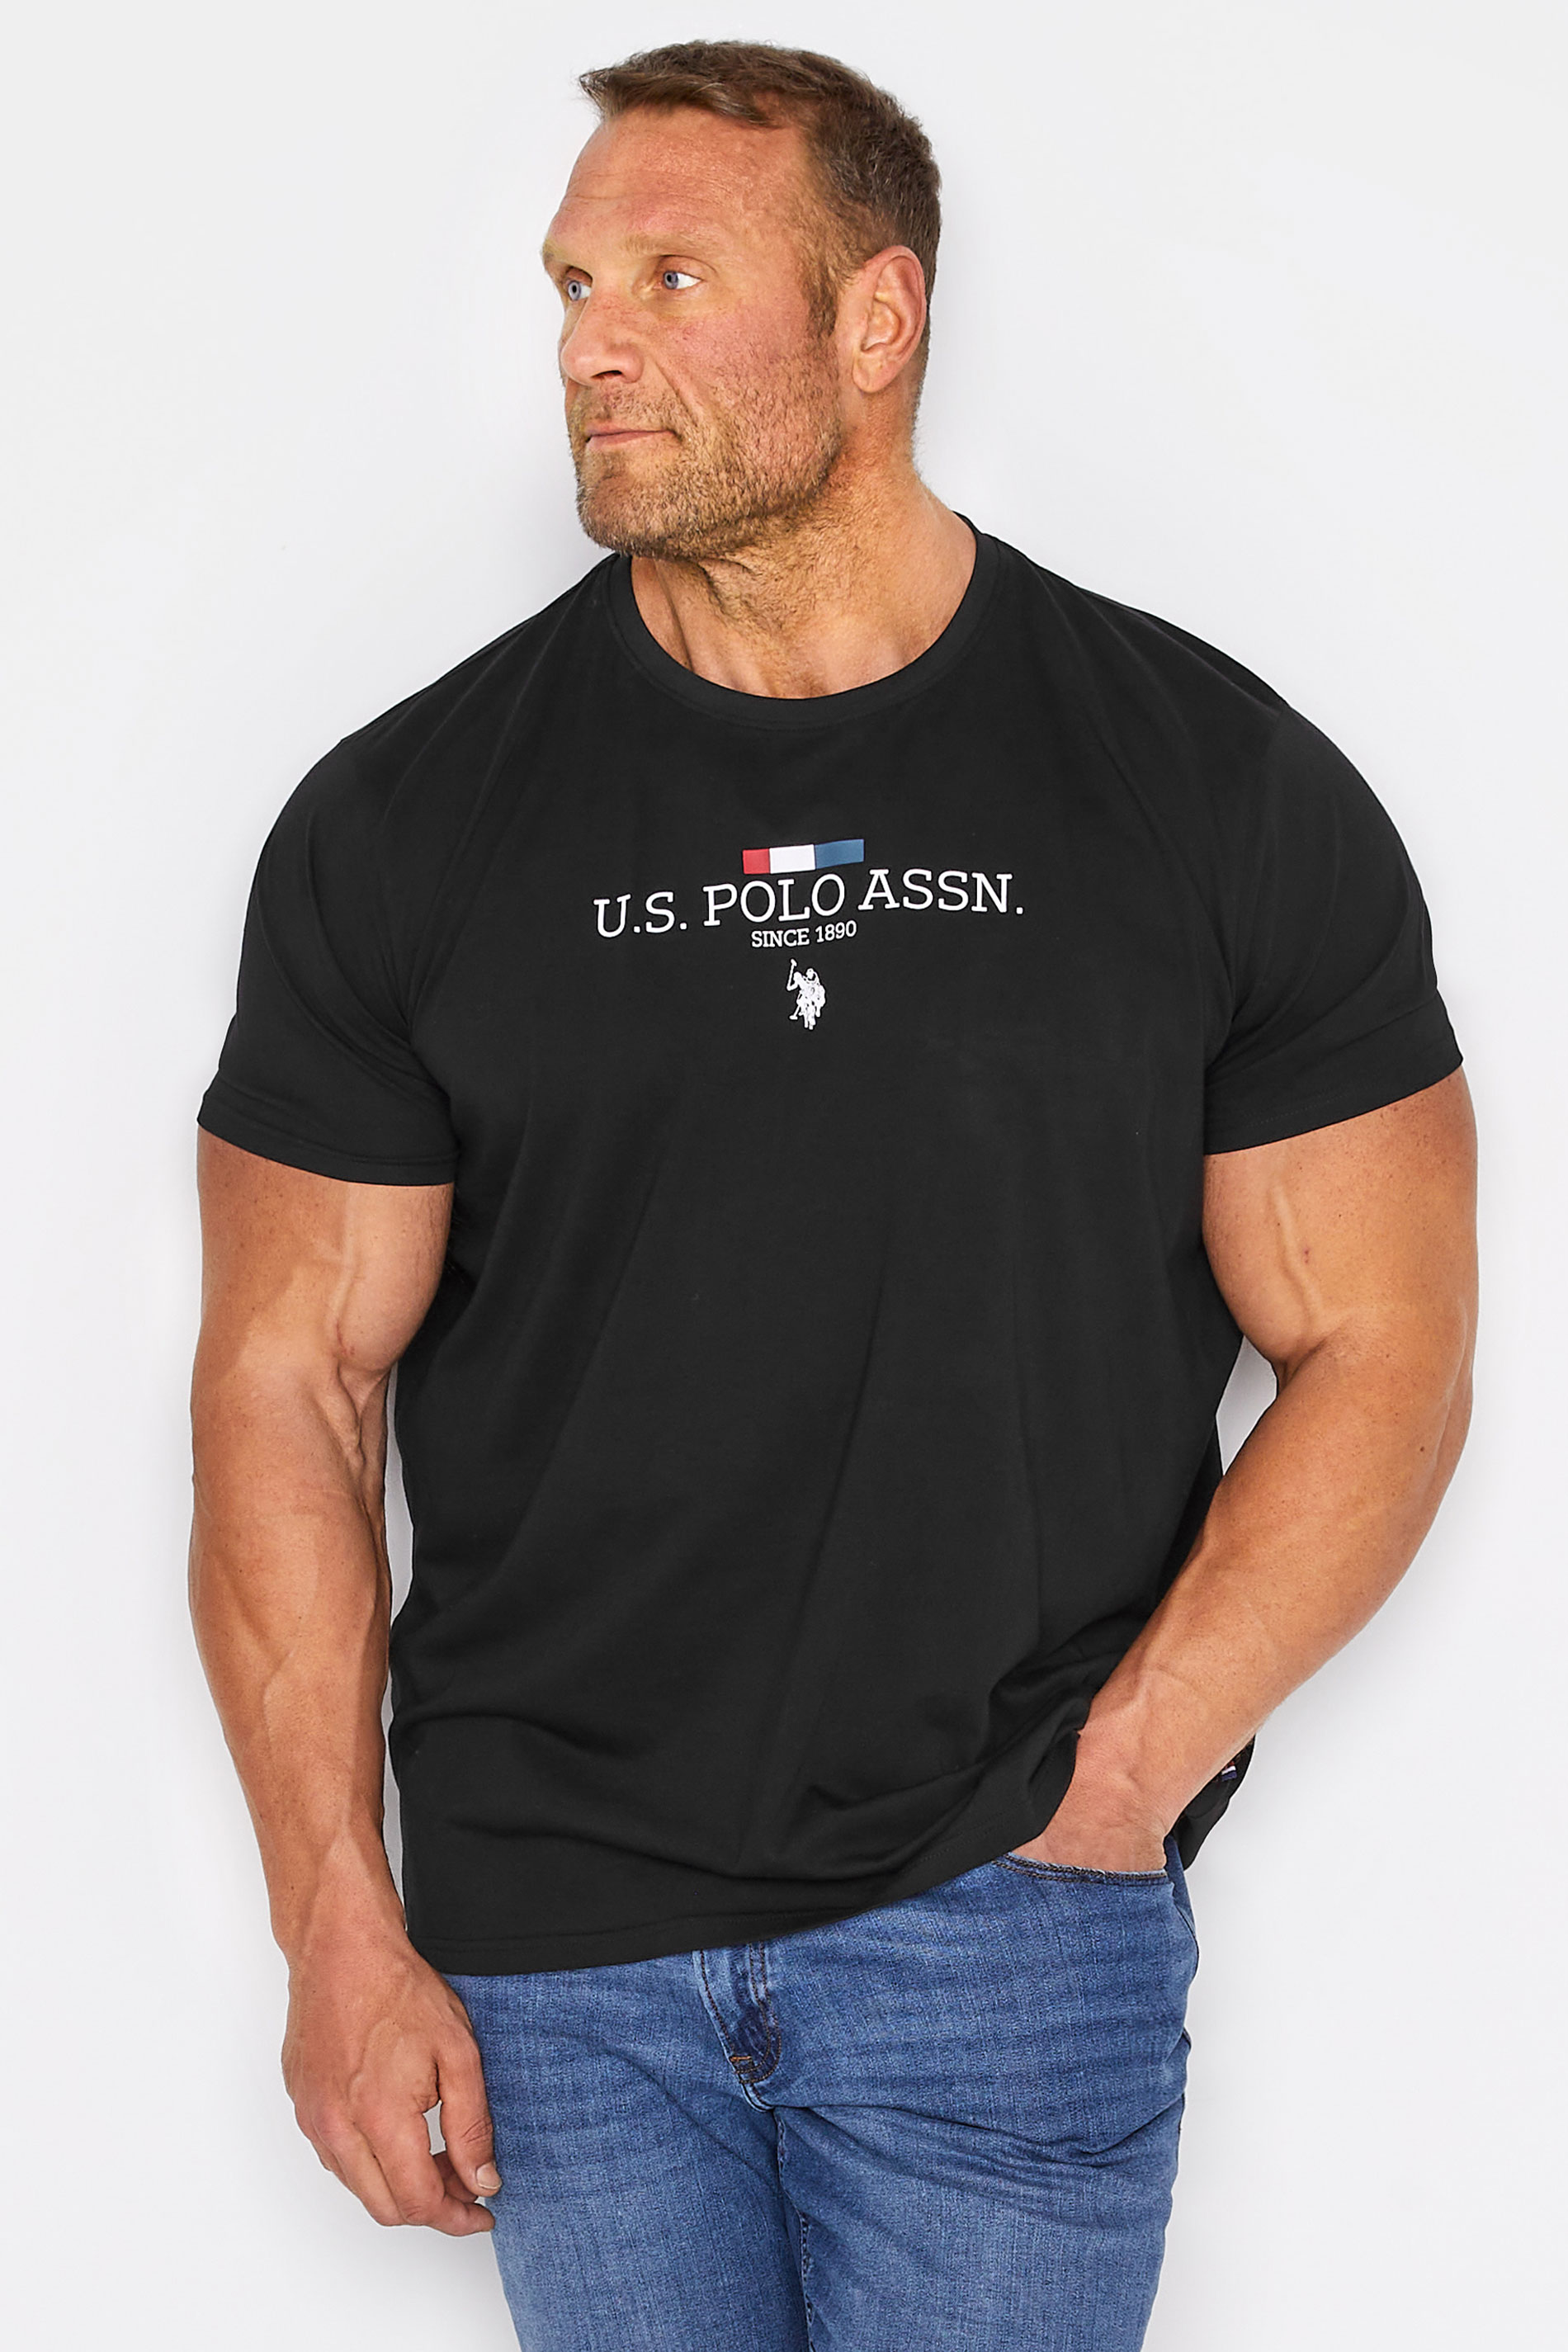 U.S. POLO ASSN. Big & Tall Black Heritage T-Shirt 1